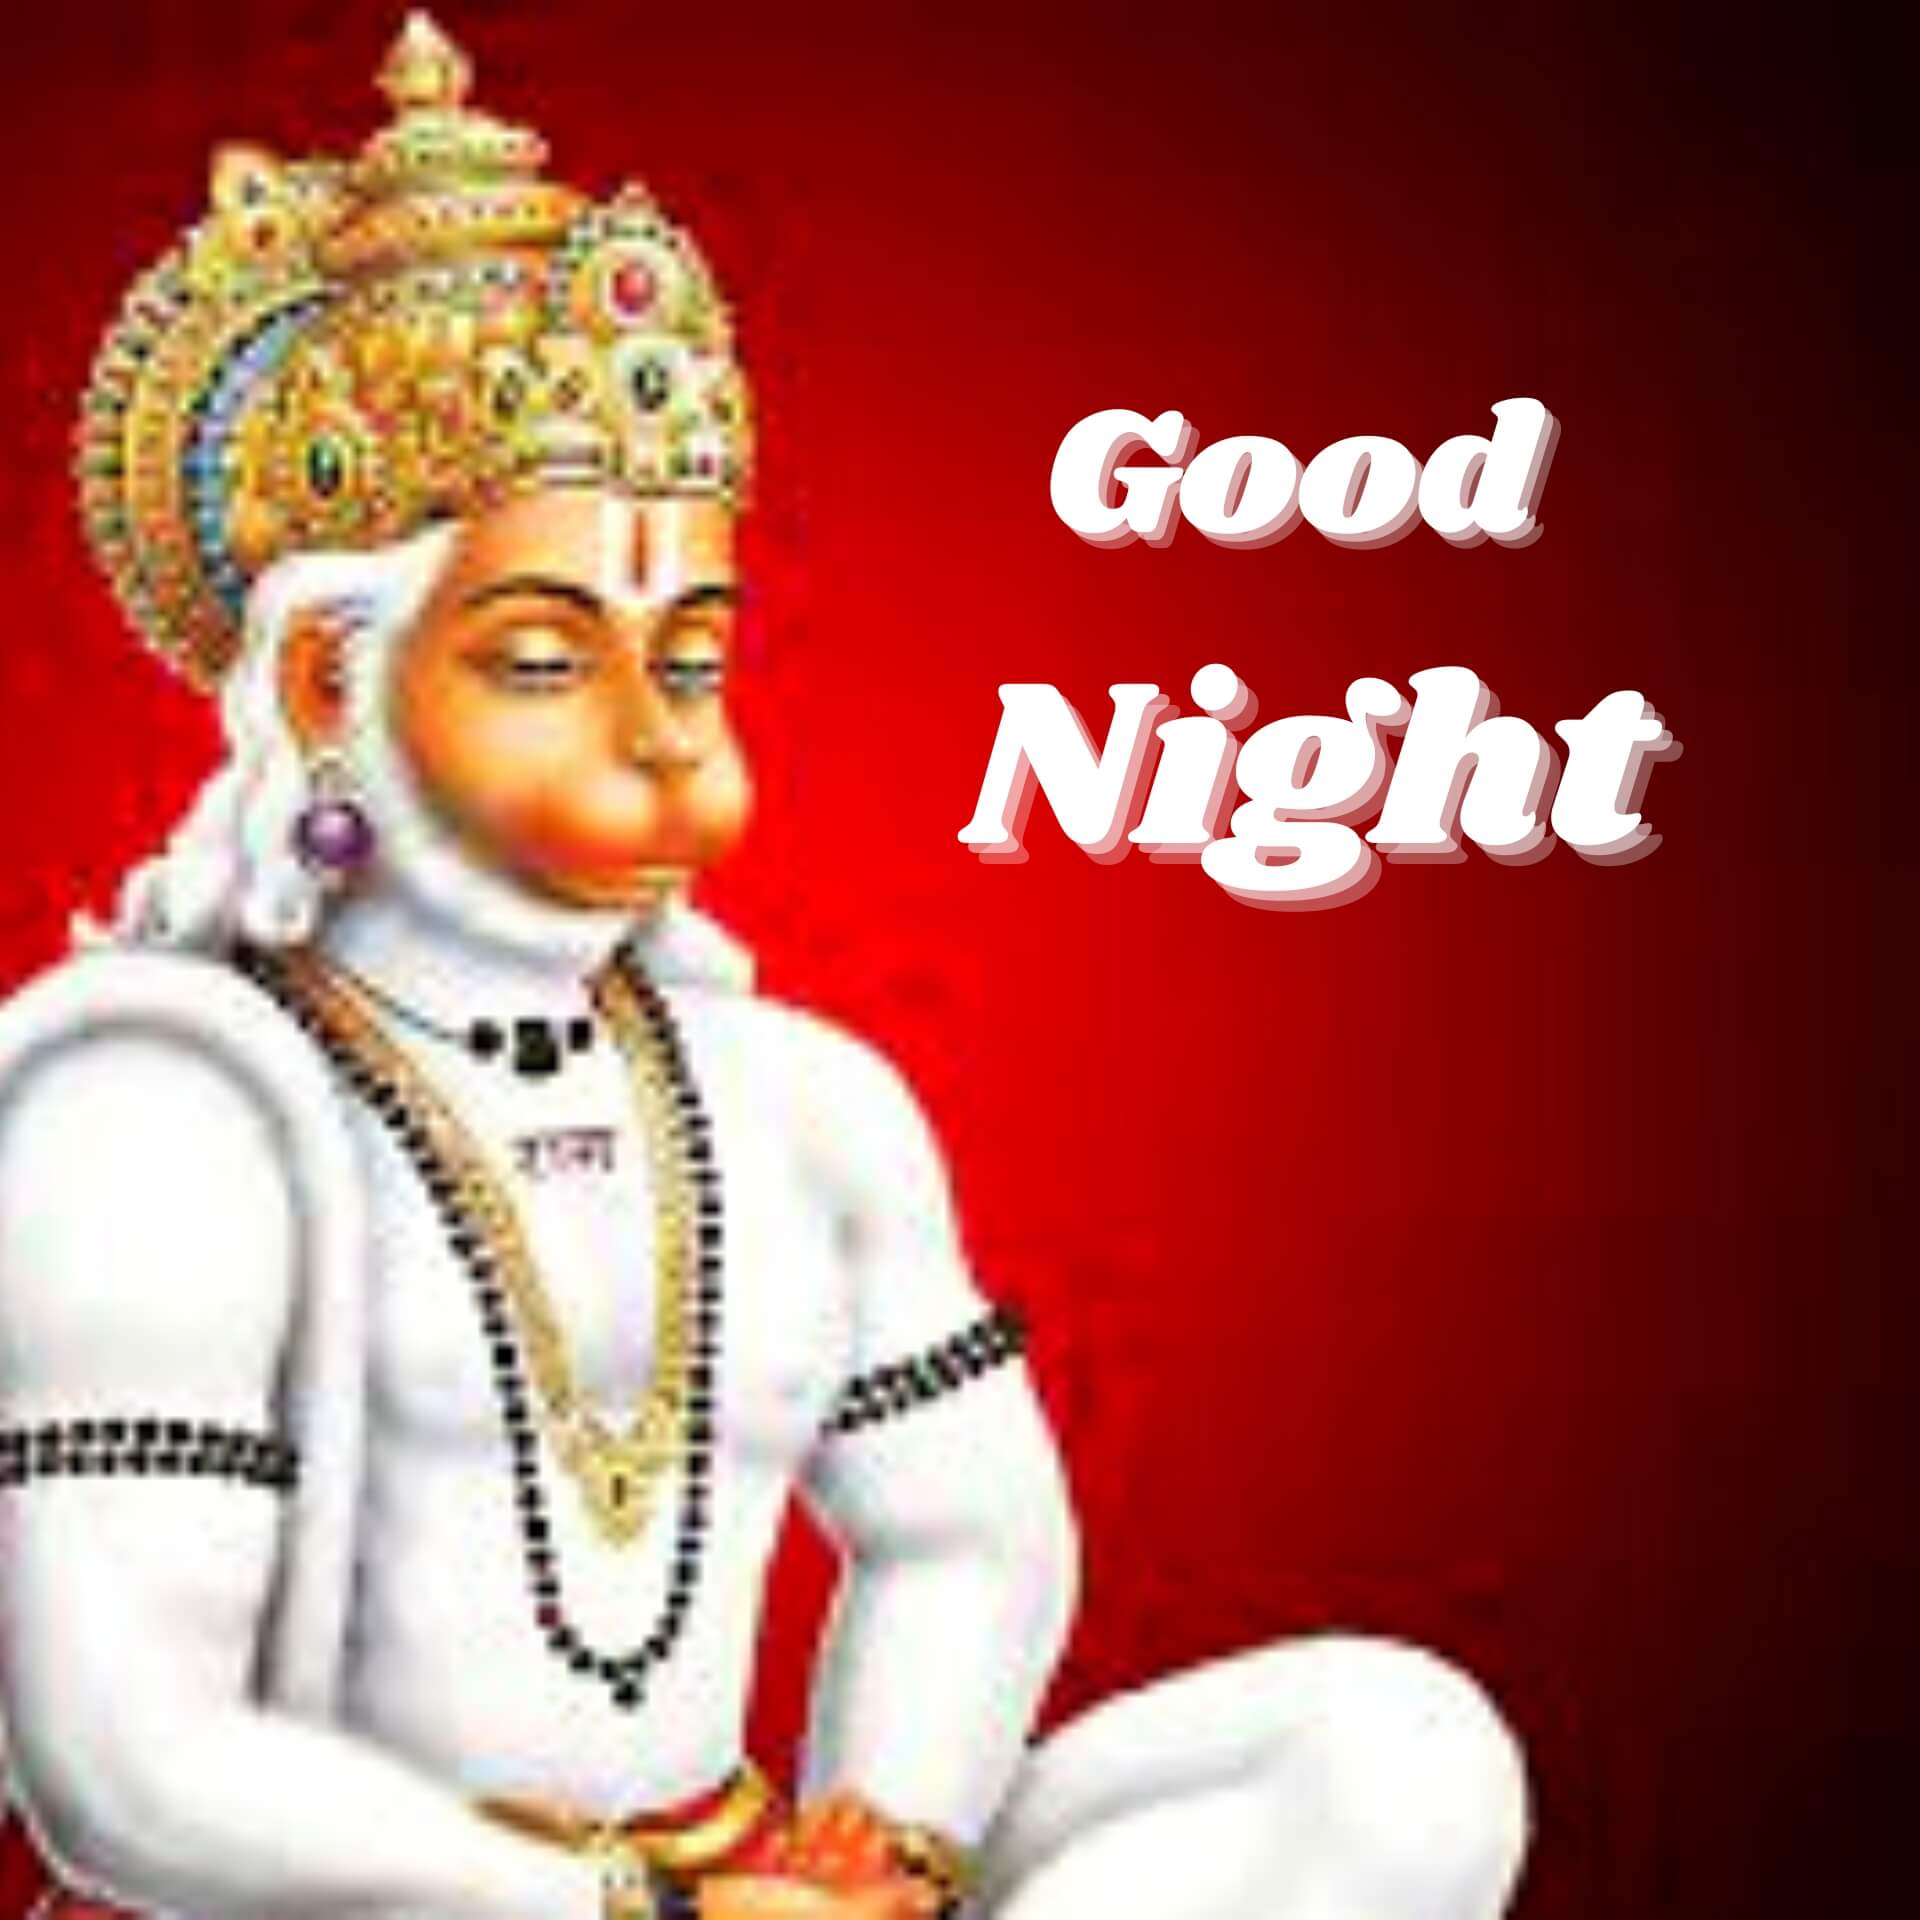 God Good Night Images Photo With Hanuman JI